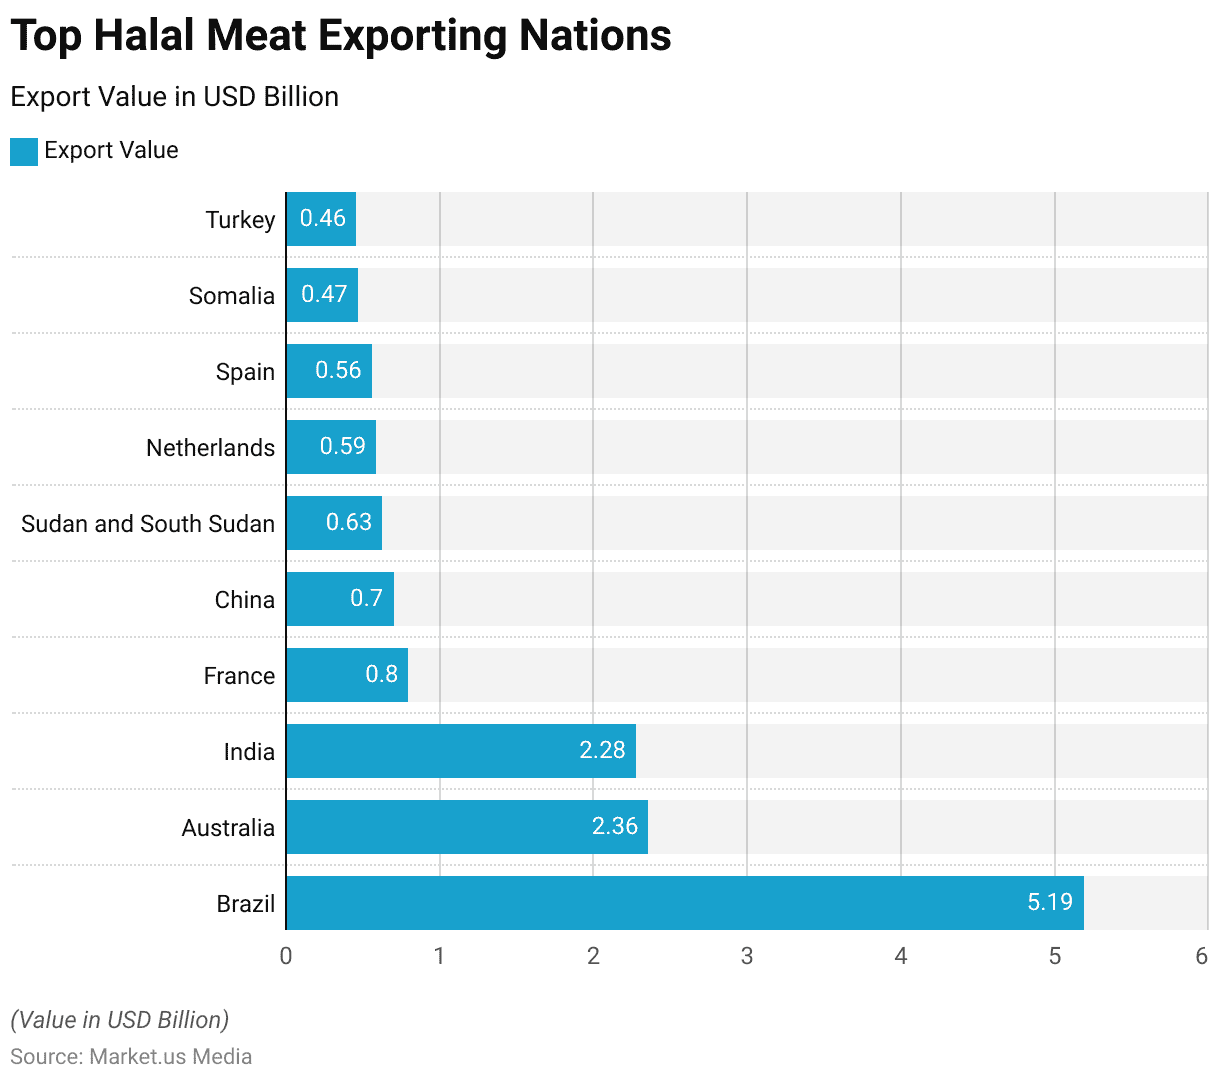 Halal Meat Statistics